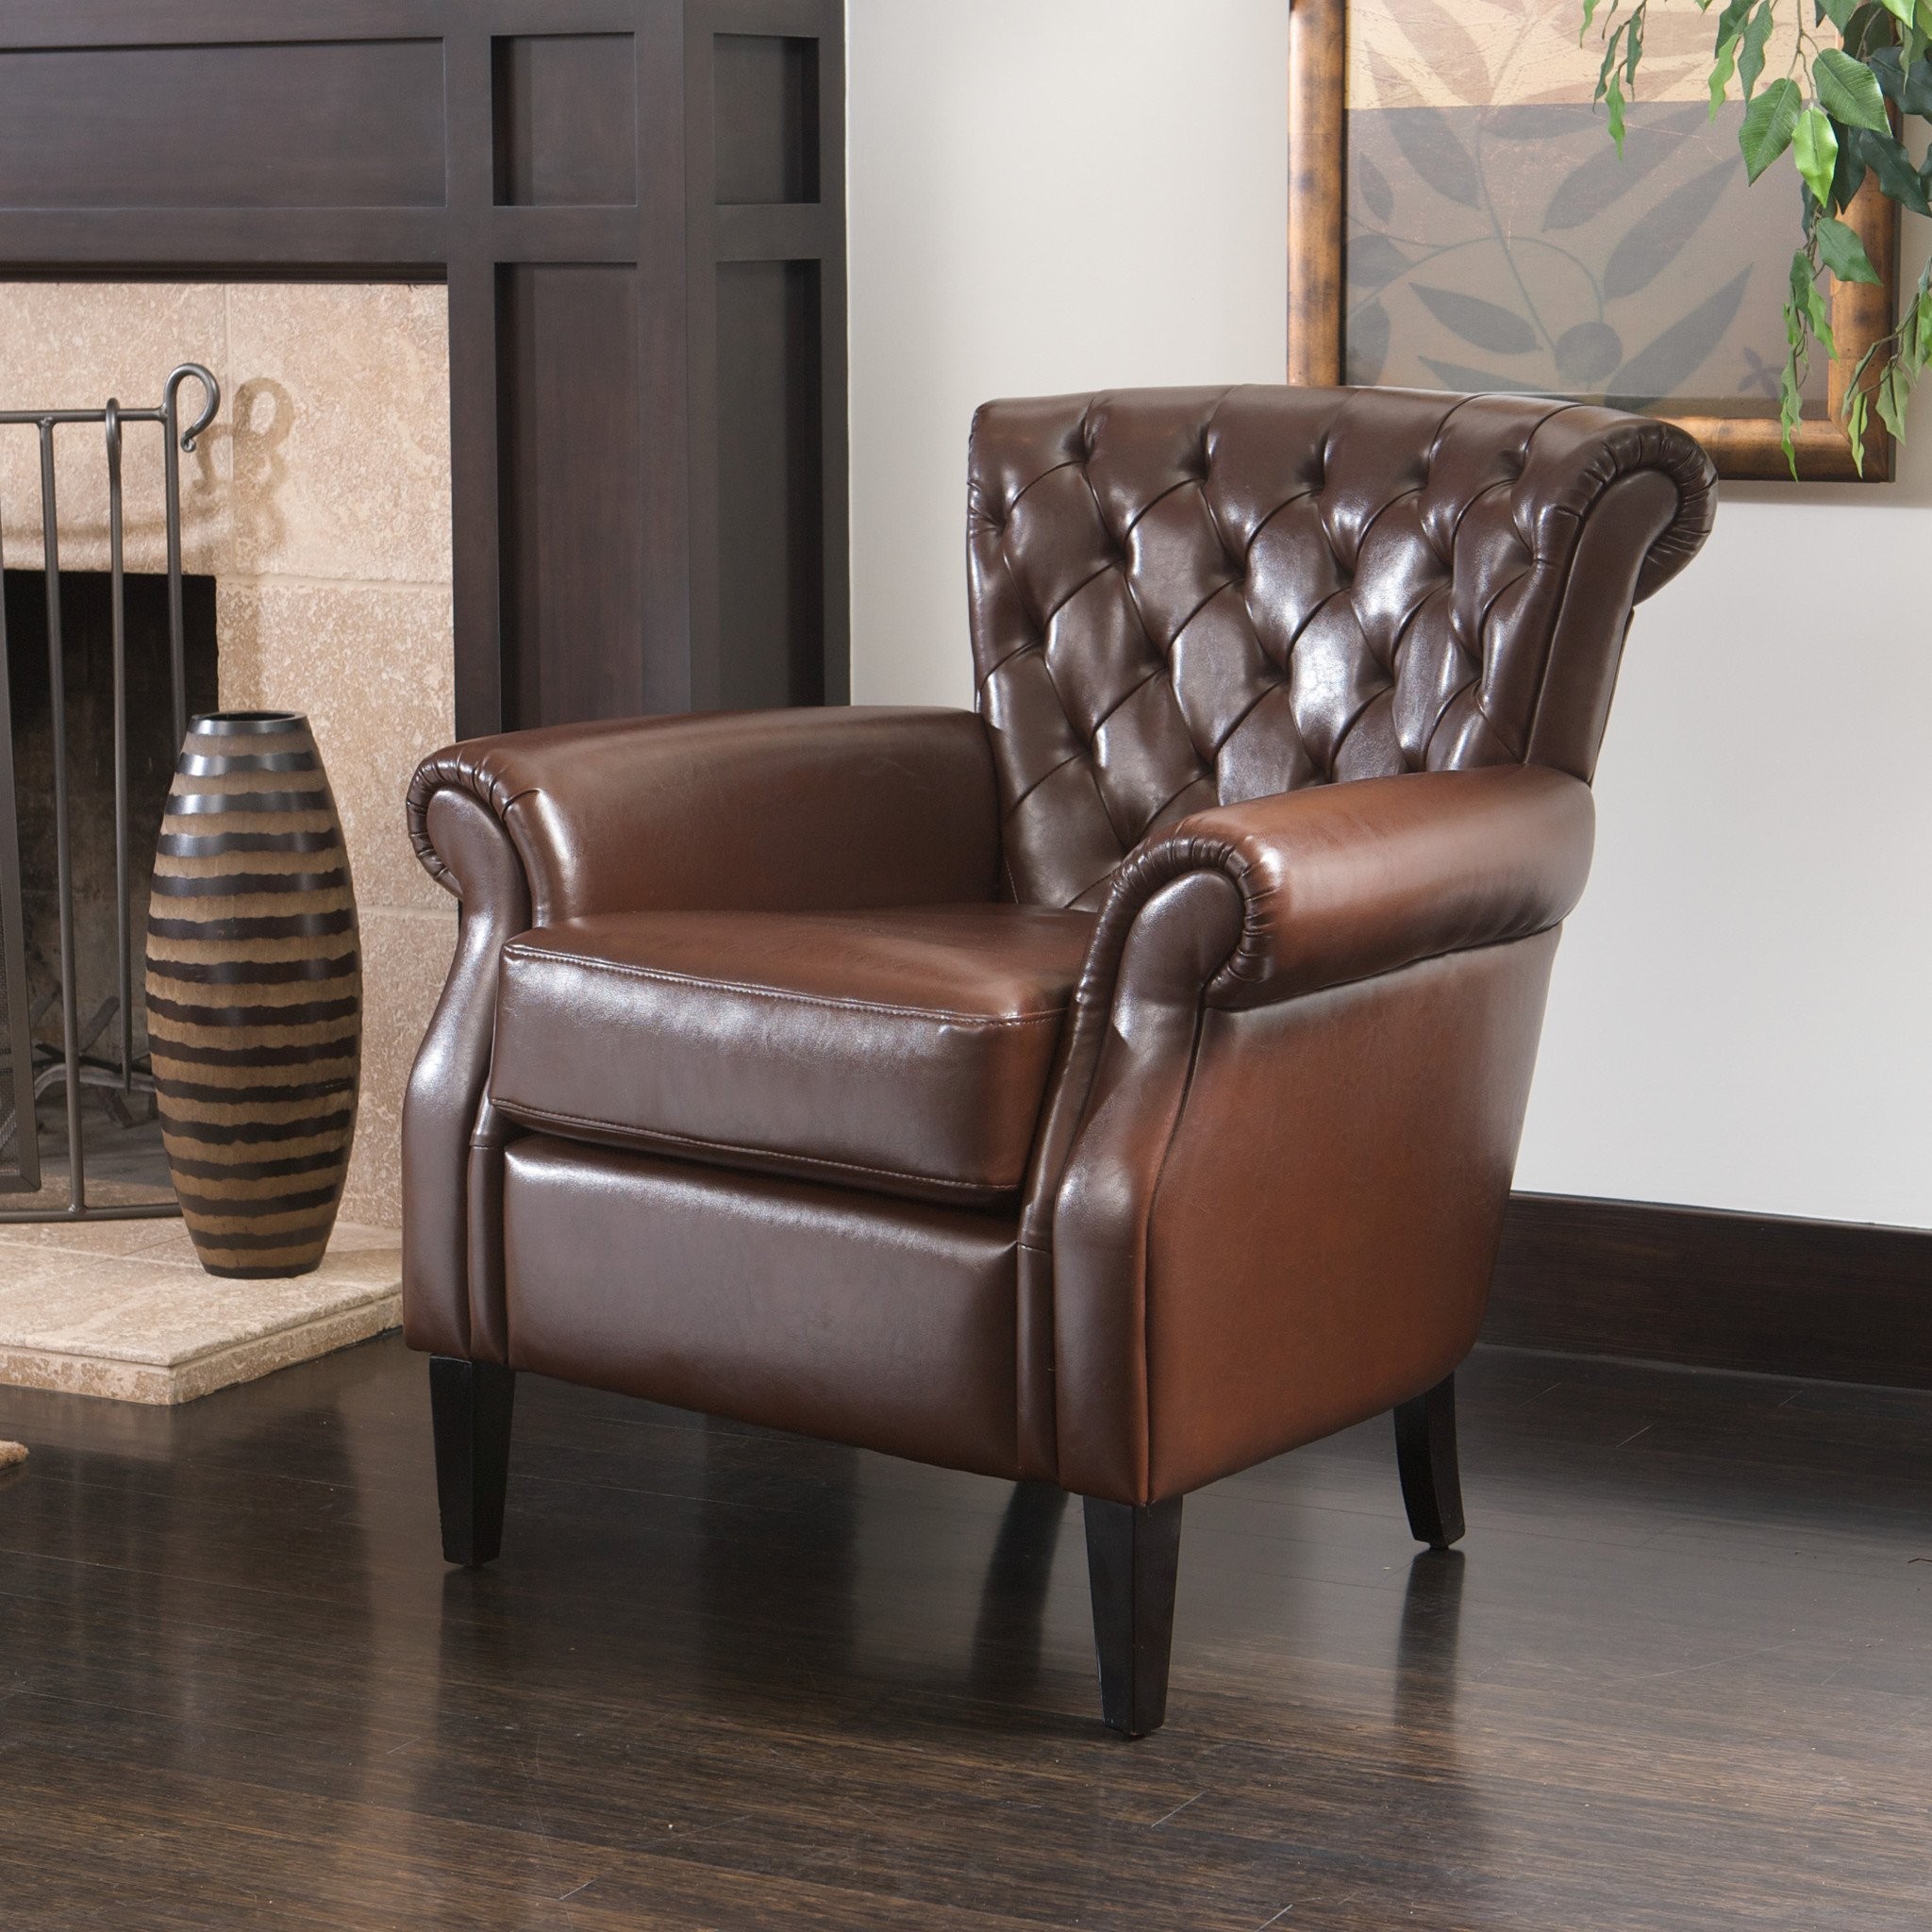 Shafford Brown Tufted Leather Club Chair